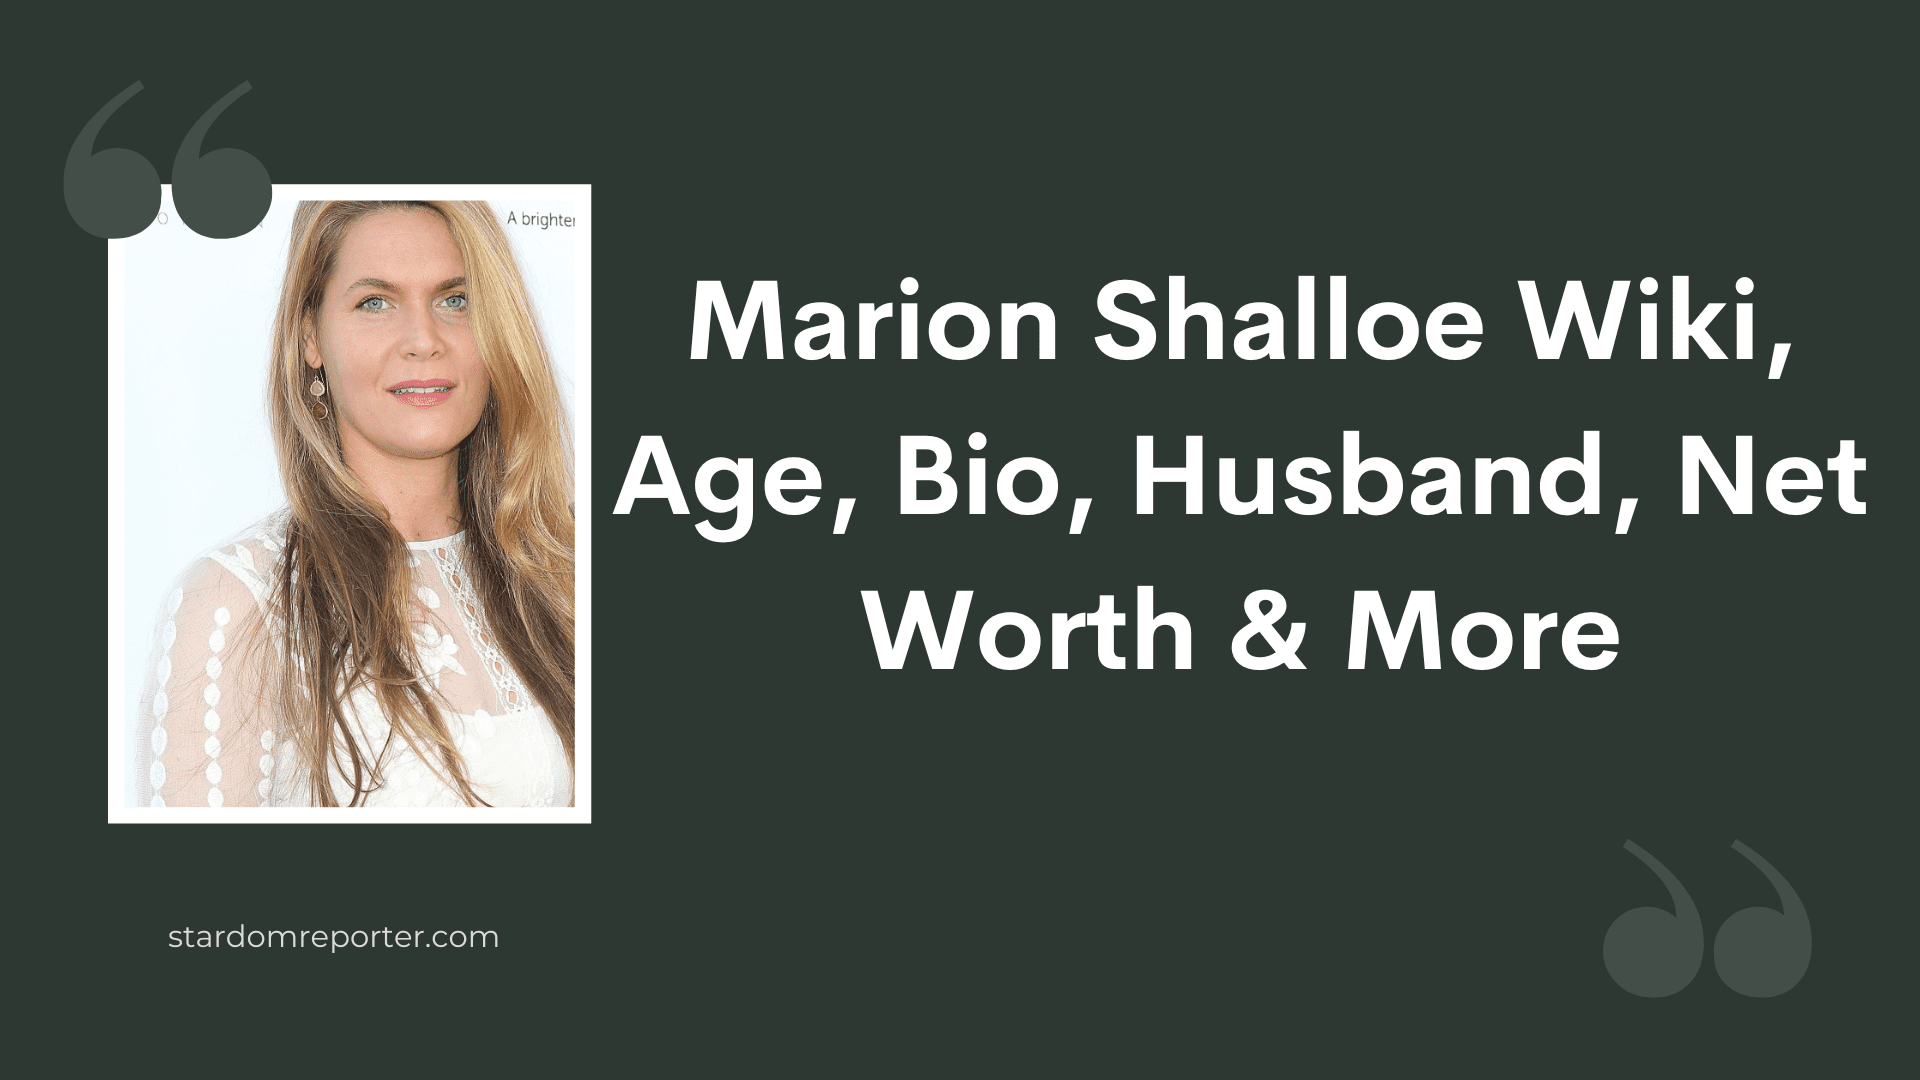 Marion Shalloe Wiki, Age, Bio, Husband, Net Worth & More - 29